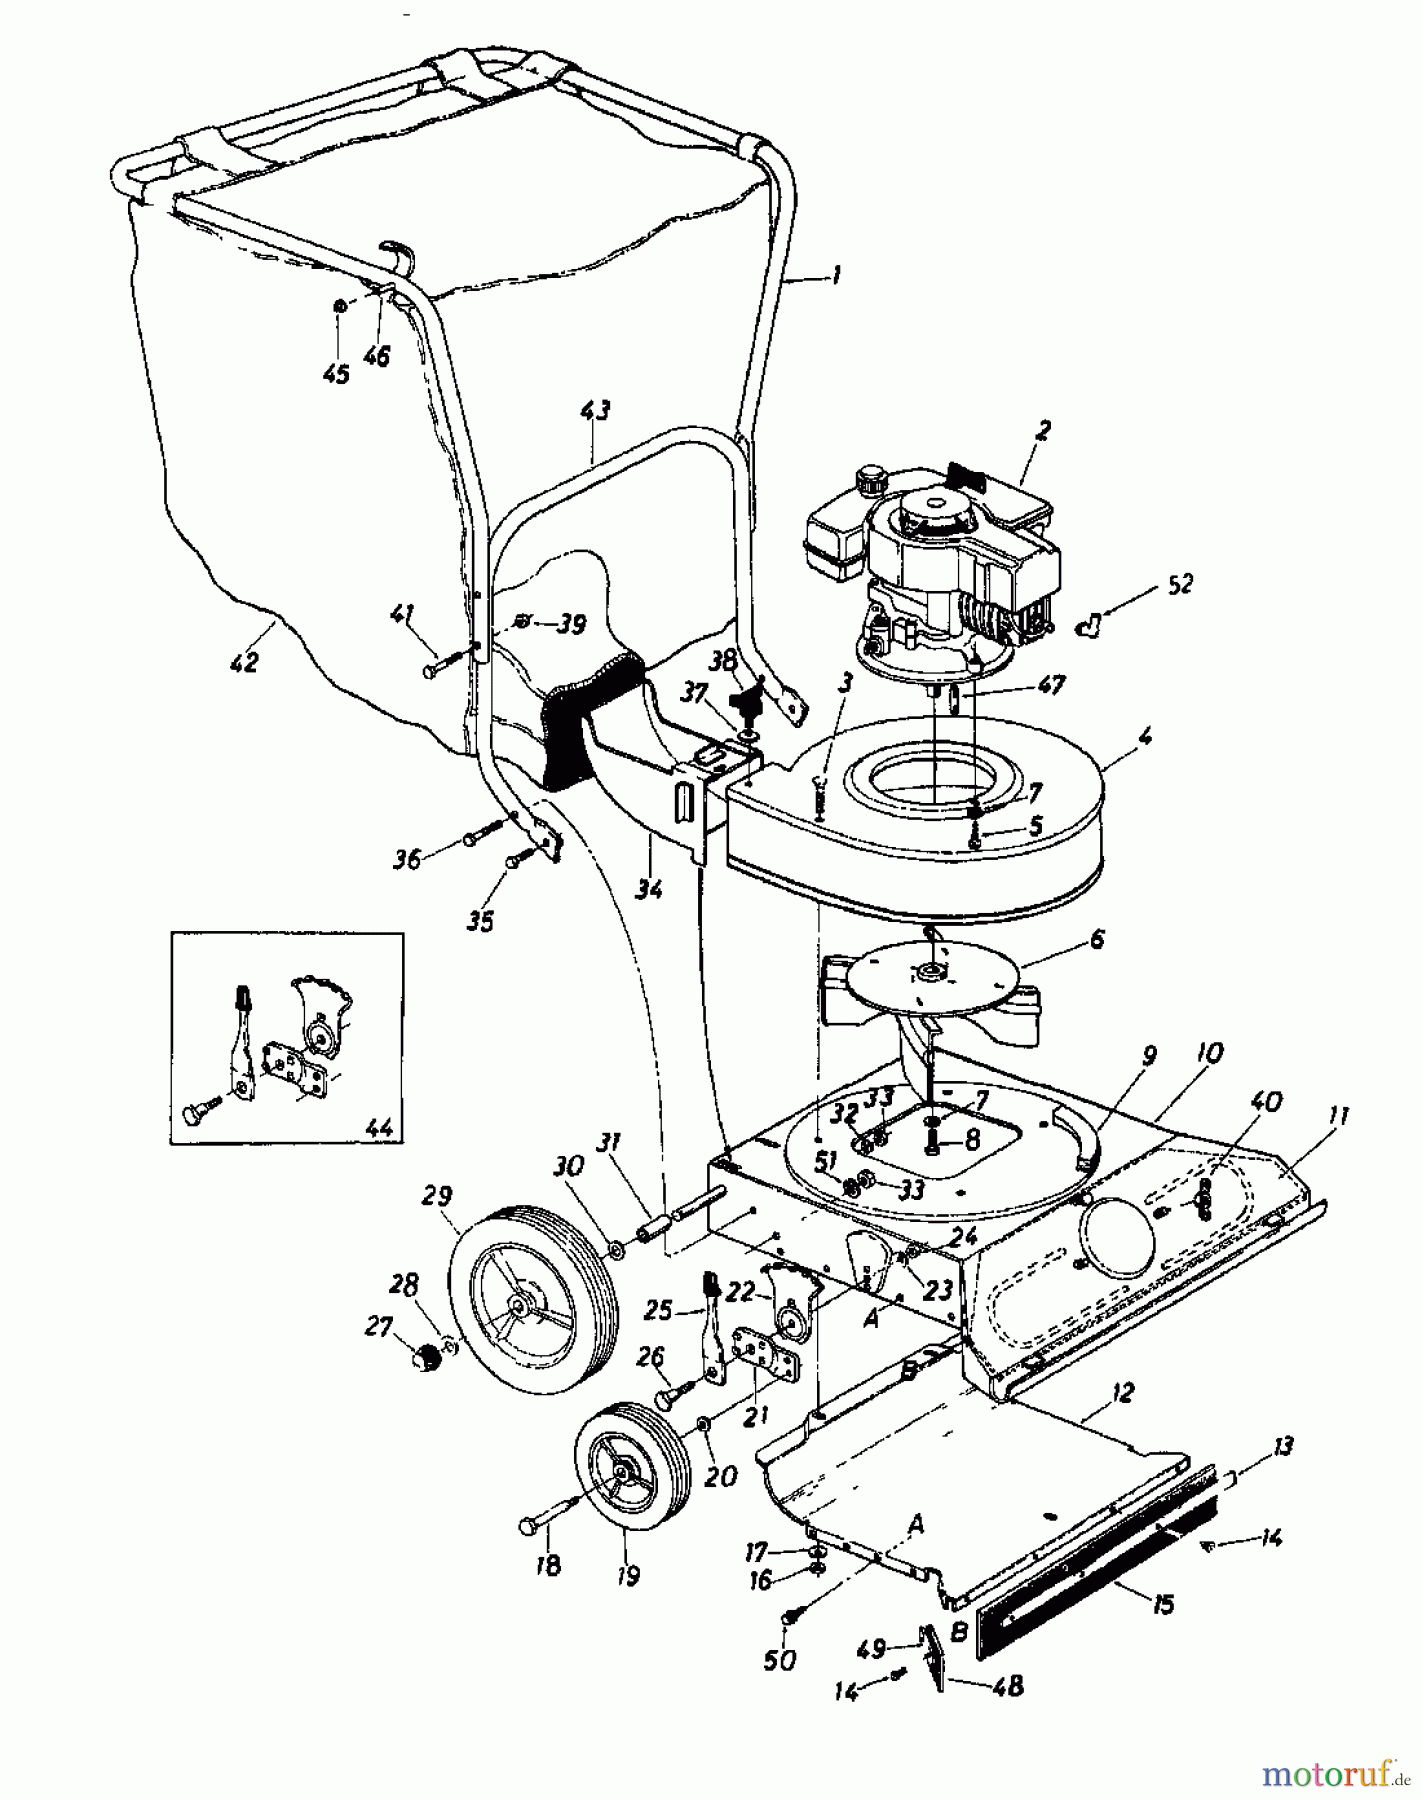  MTD Leaf blower, Blower vac Air-Vac 660 248-6600  (1988) Basic machine